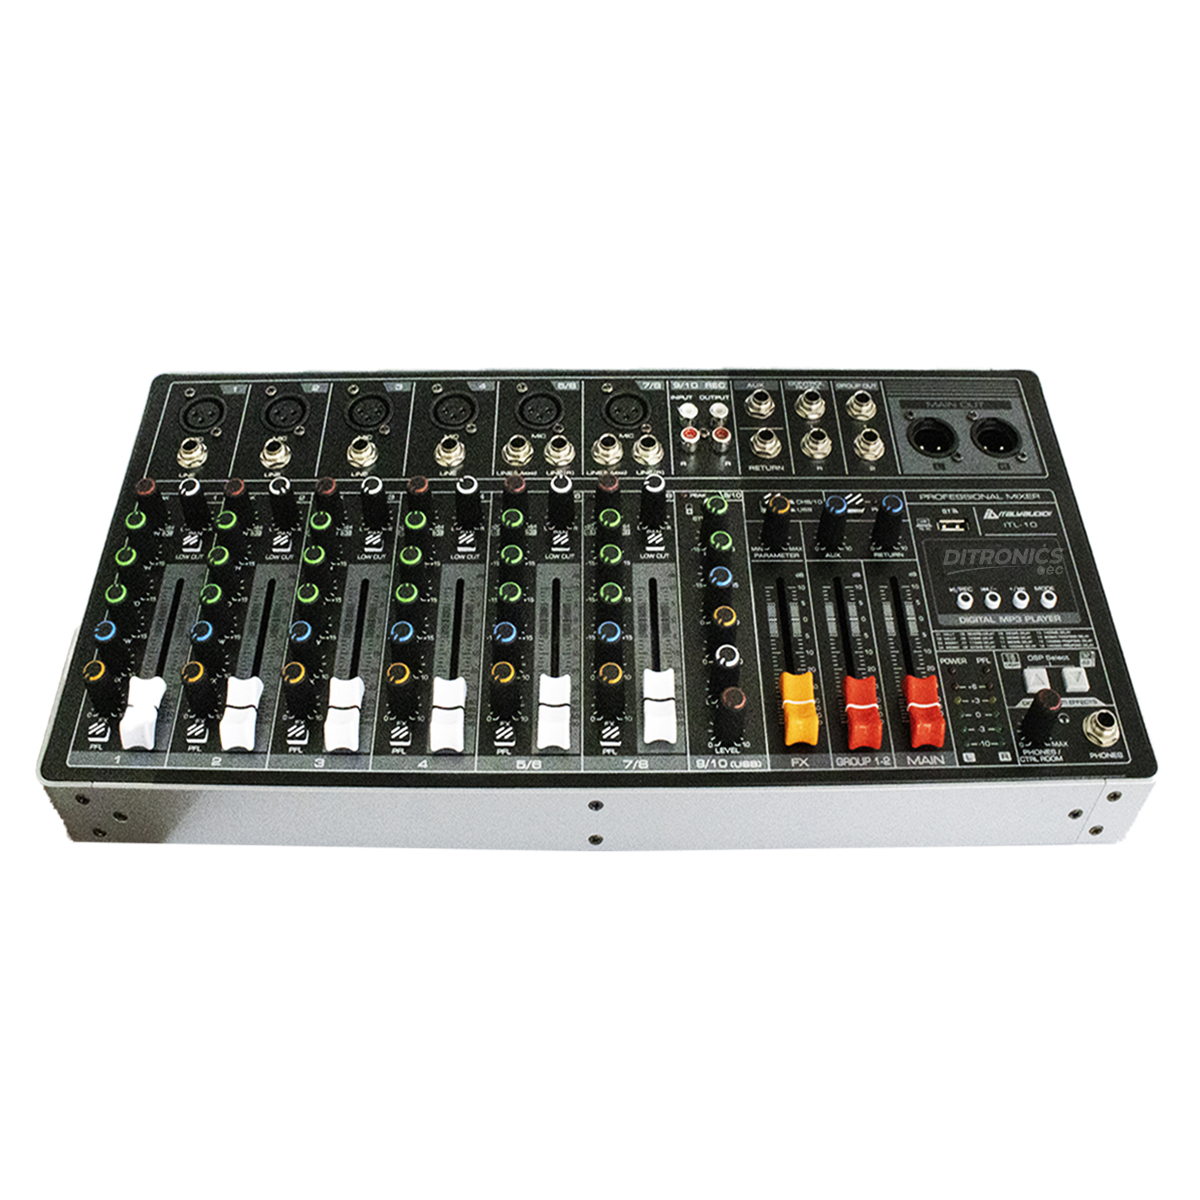 Italy Audio ITL 10 Consola Ditronics Ecuador 3